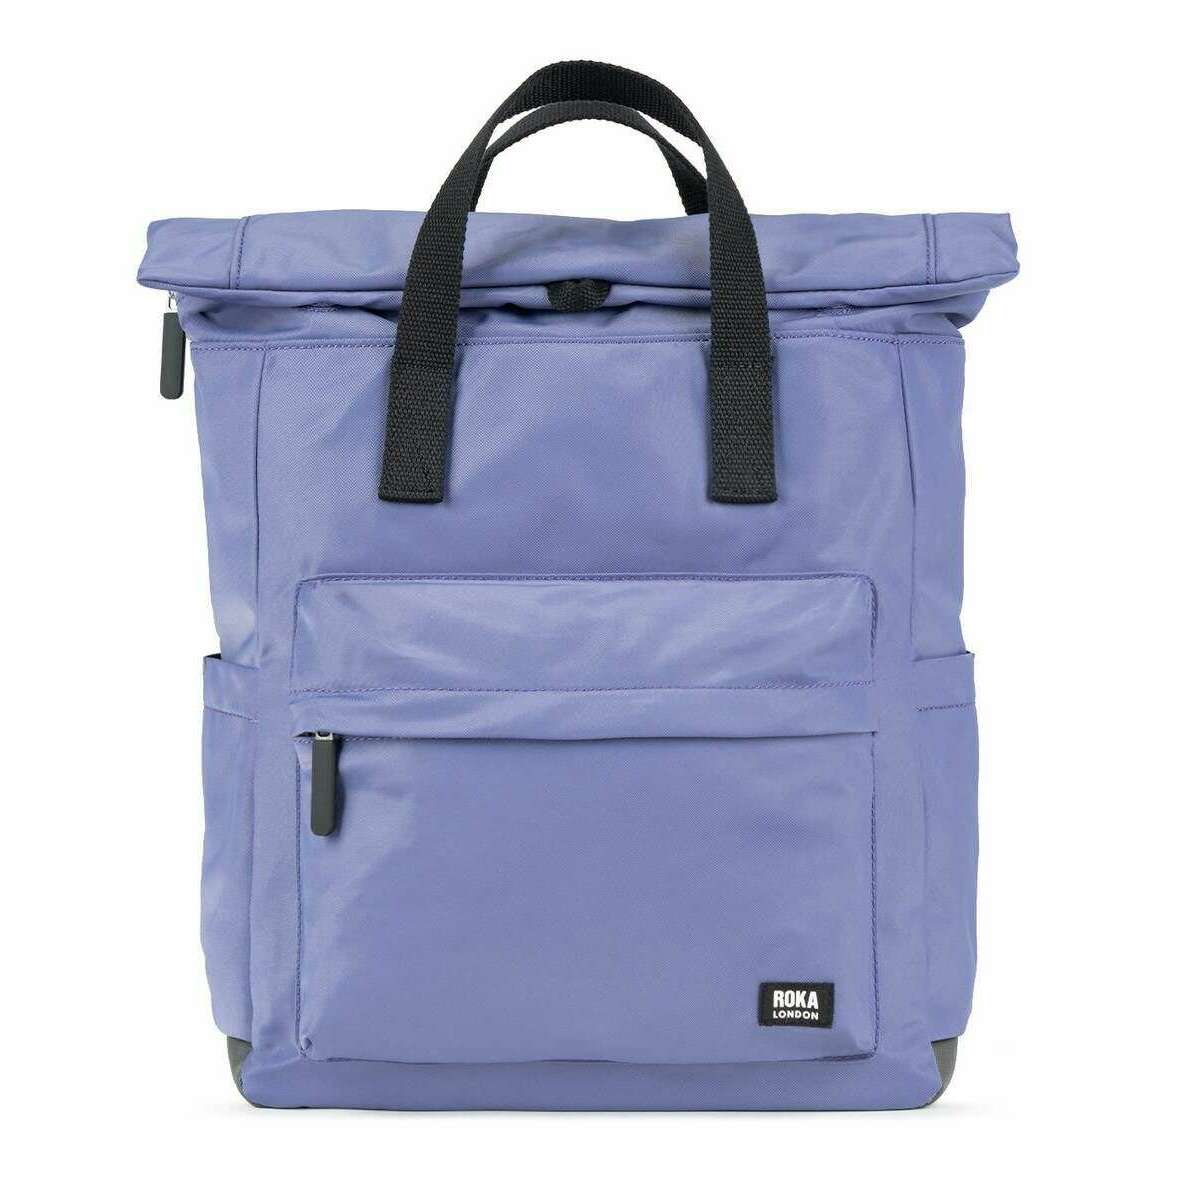 Roka Canfield B Medium Black Label Recycled Nylon Backpack - Dusted Peri Purple